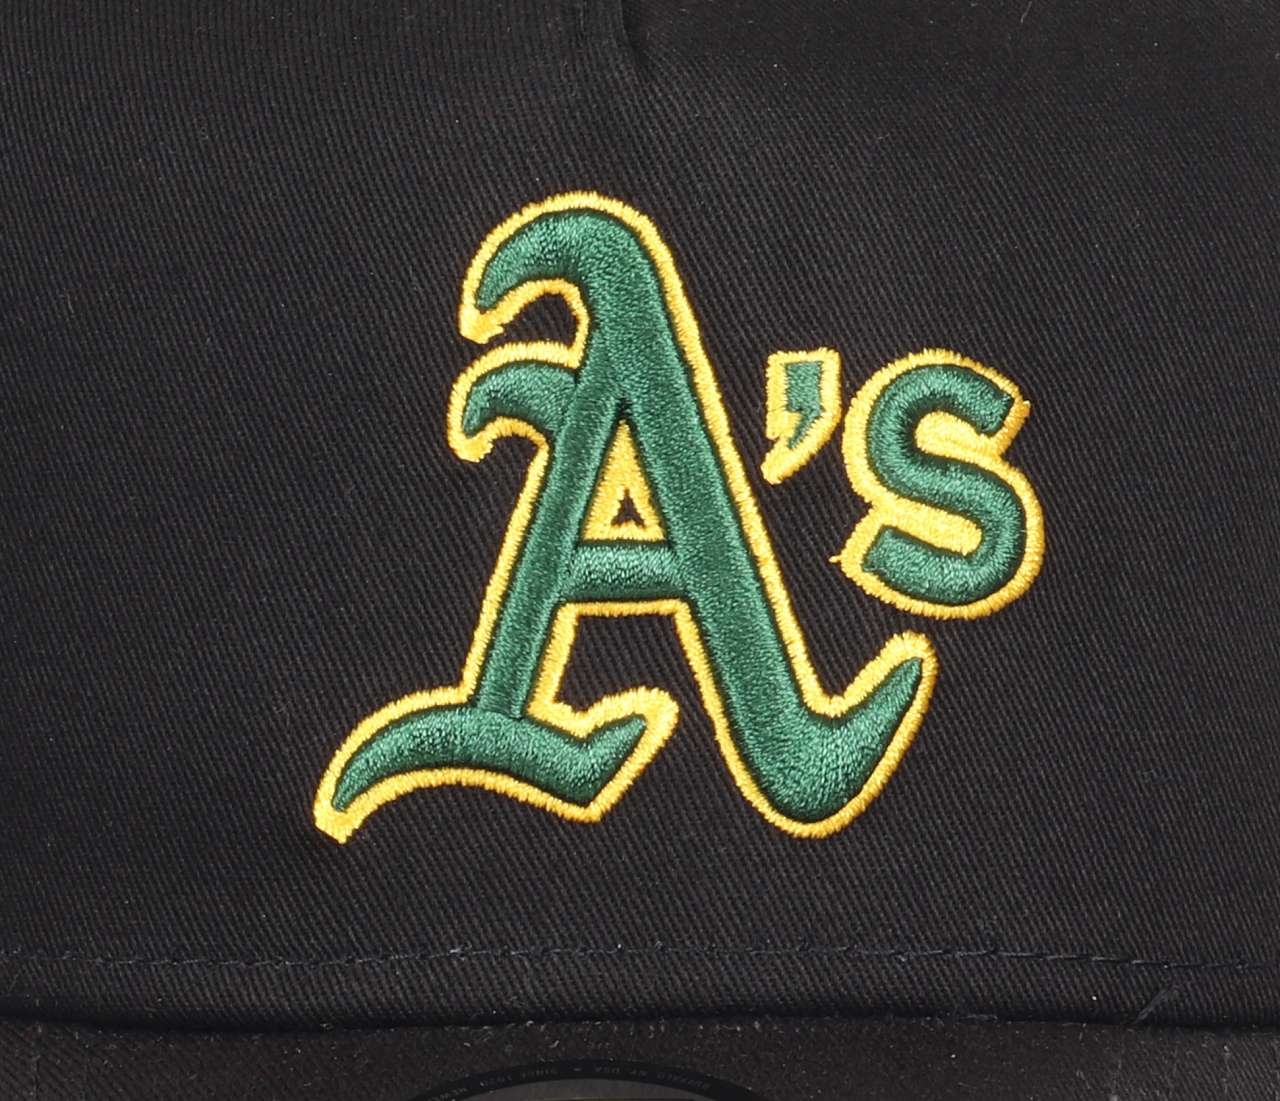 Oakland Athletics MLB Evergreen Black 9Forty A-Frame Snapback Cap New Era